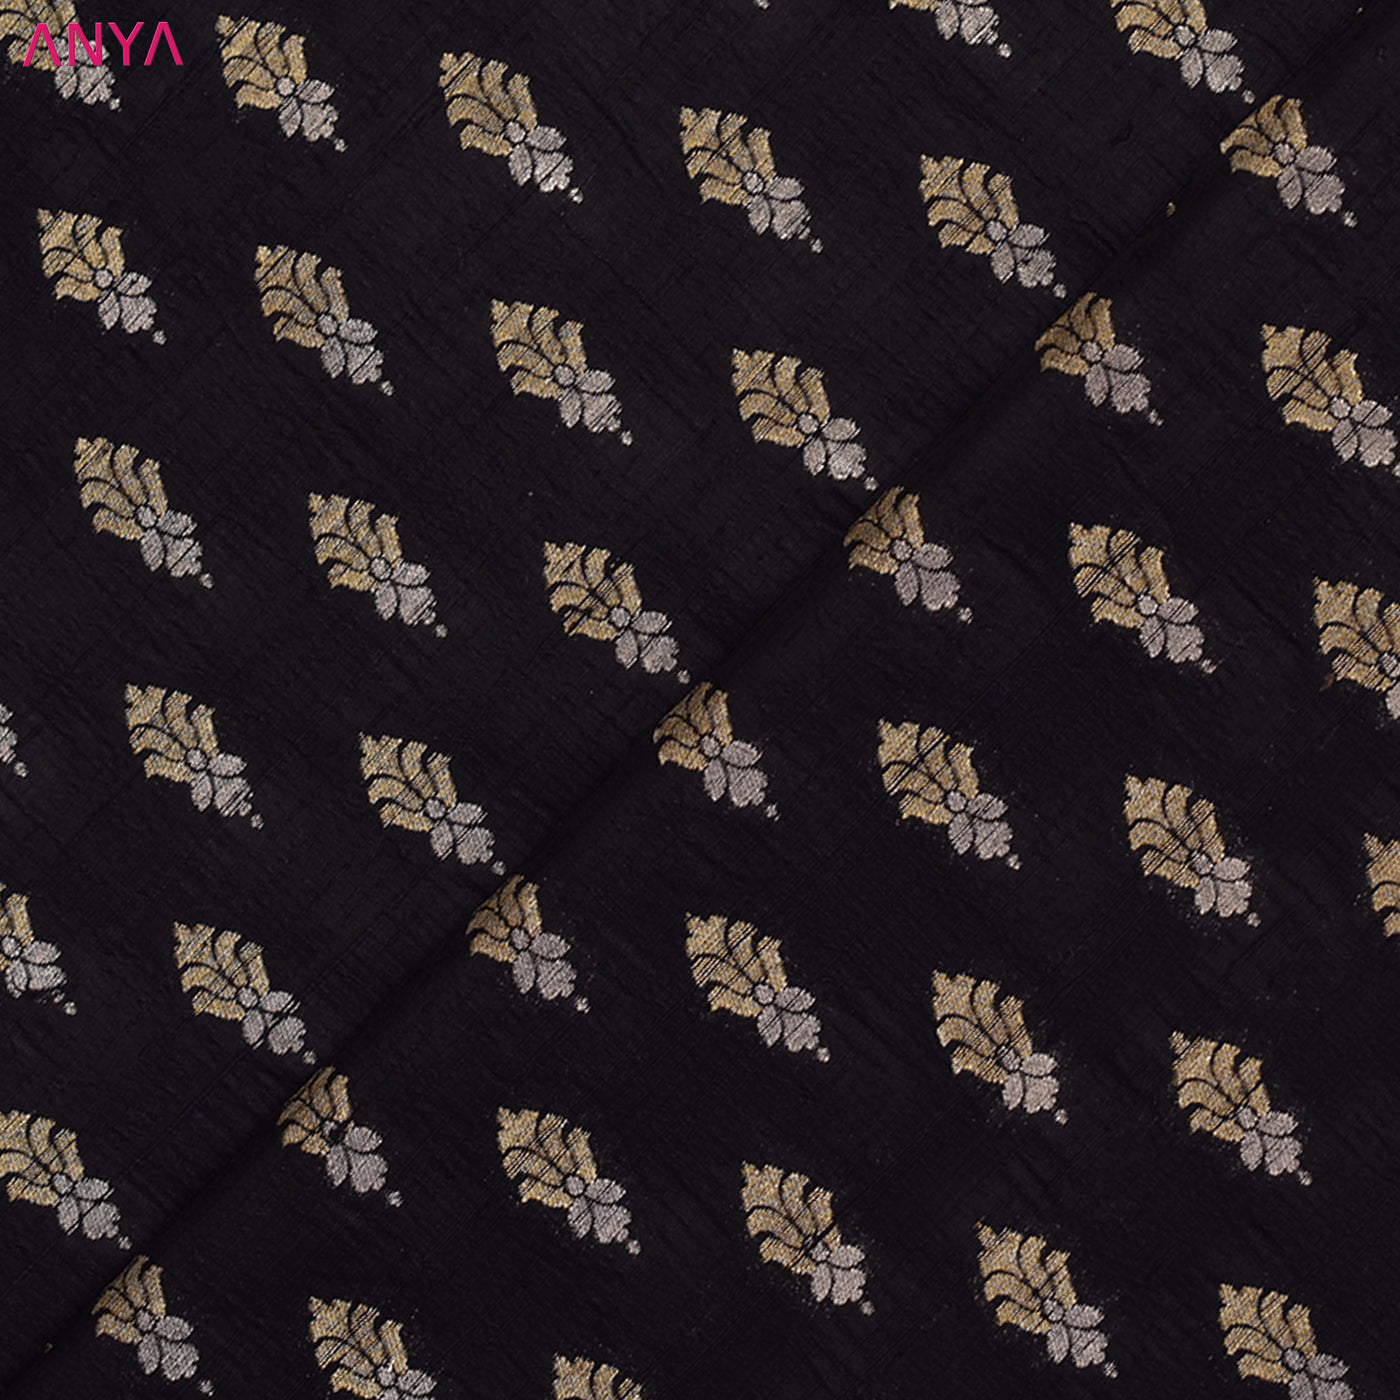 Black Tussar Raw Silk Fabric with Flower Butta Design